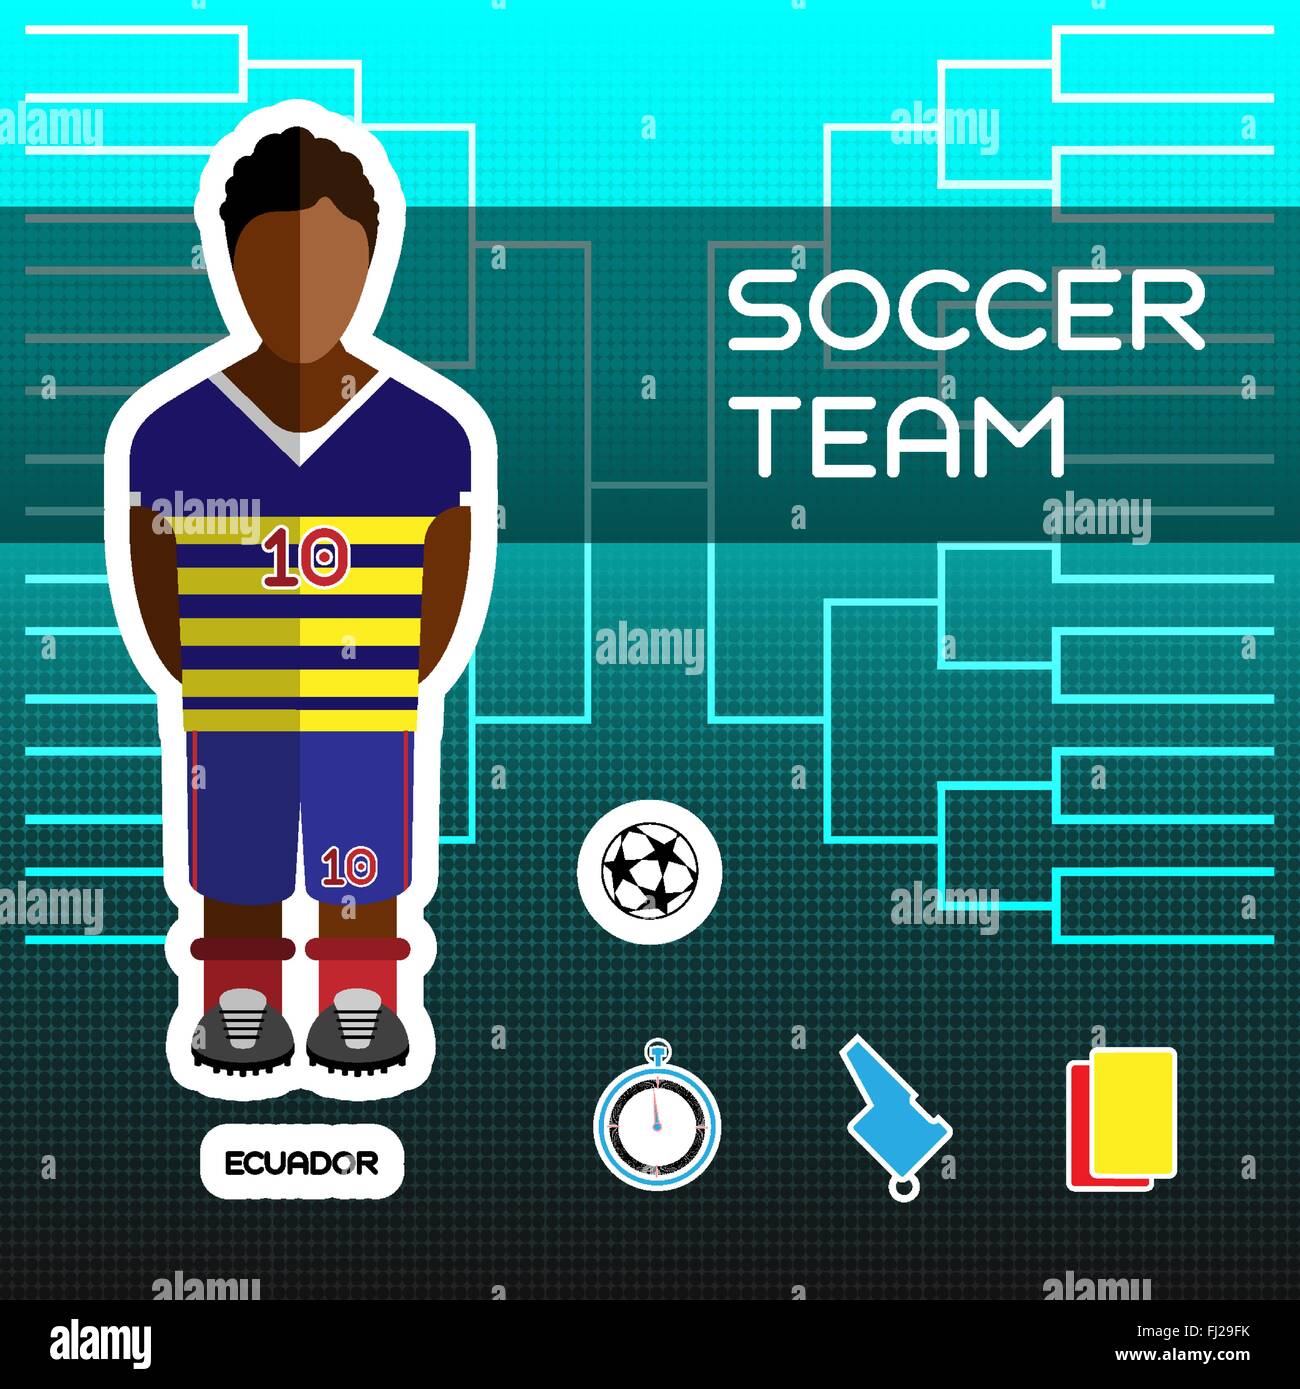 Soccer Team - Ecuador. Football Players Scoreboard. Vector digital illustration. Soccer tournament sheet. Visual graphic. Stock Vector